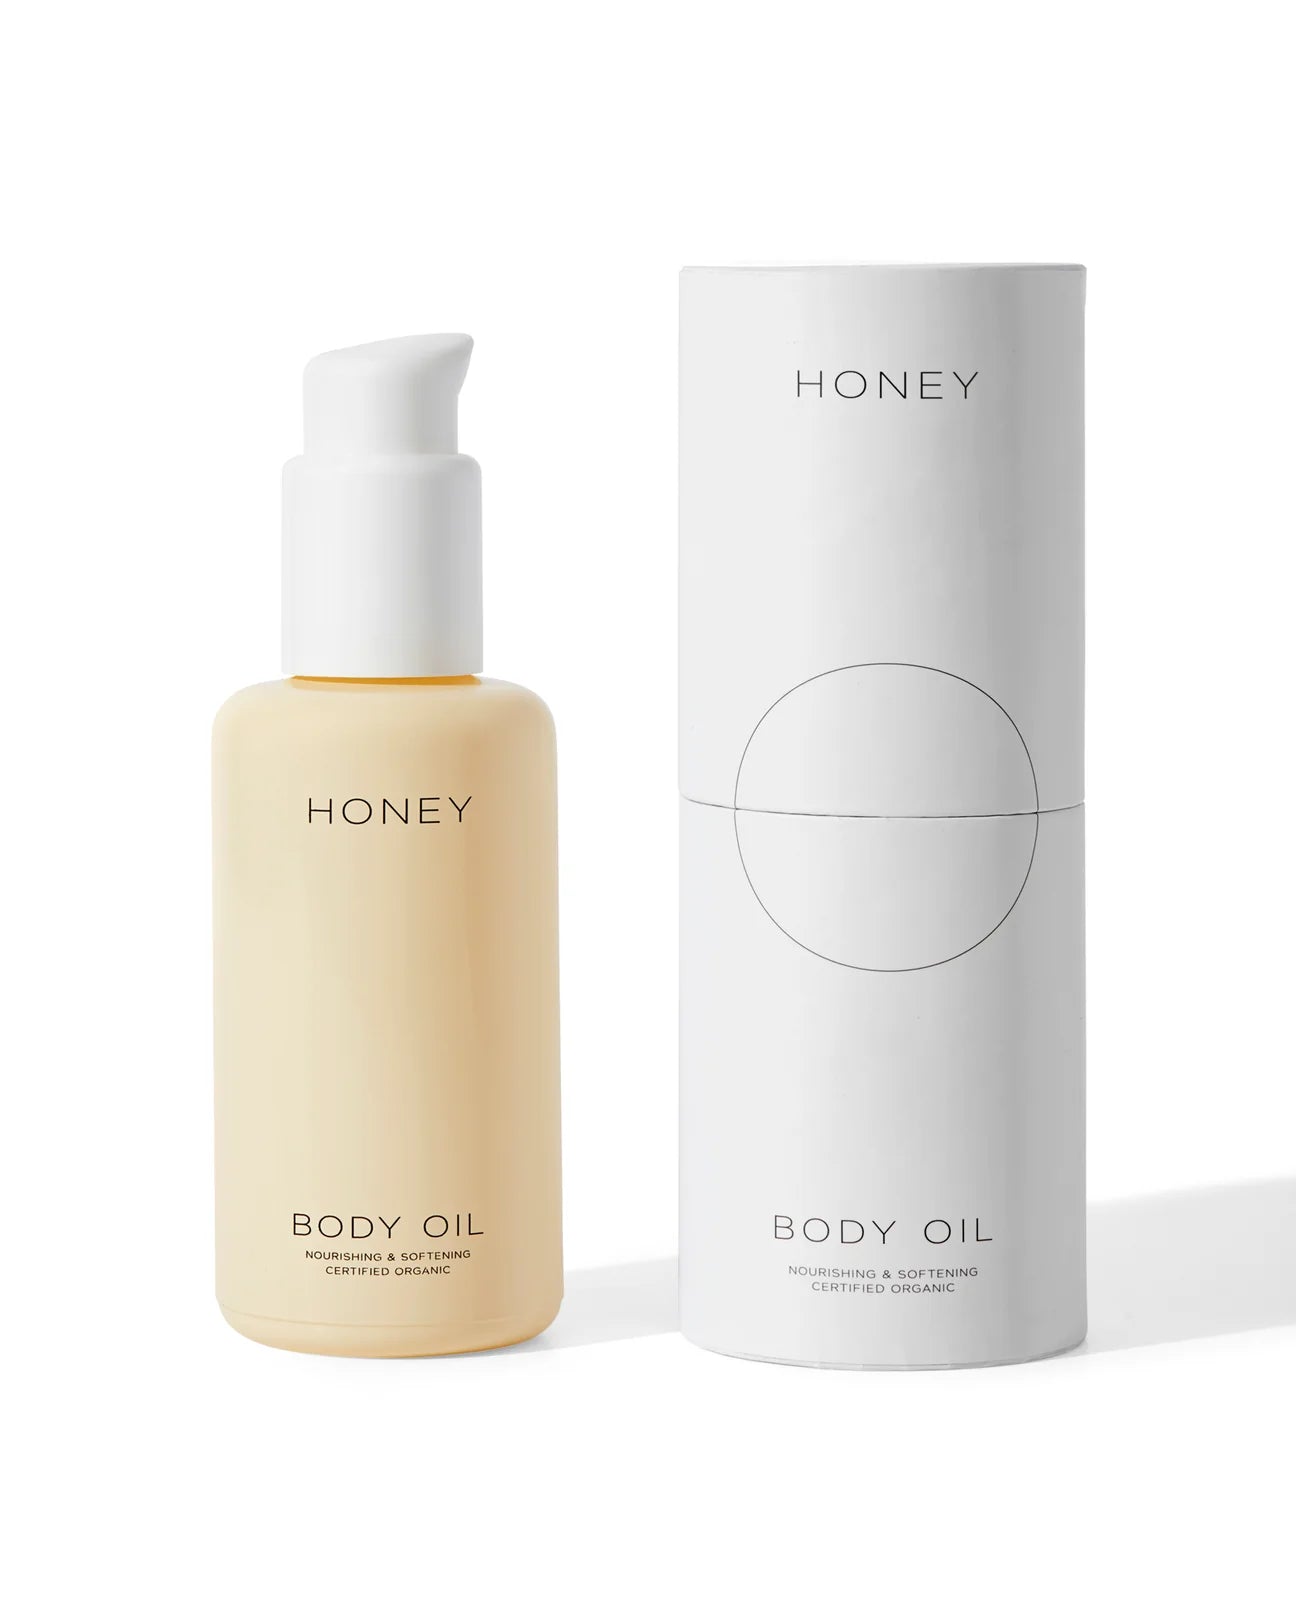 Body Oil bottle and packaging  from HONEY